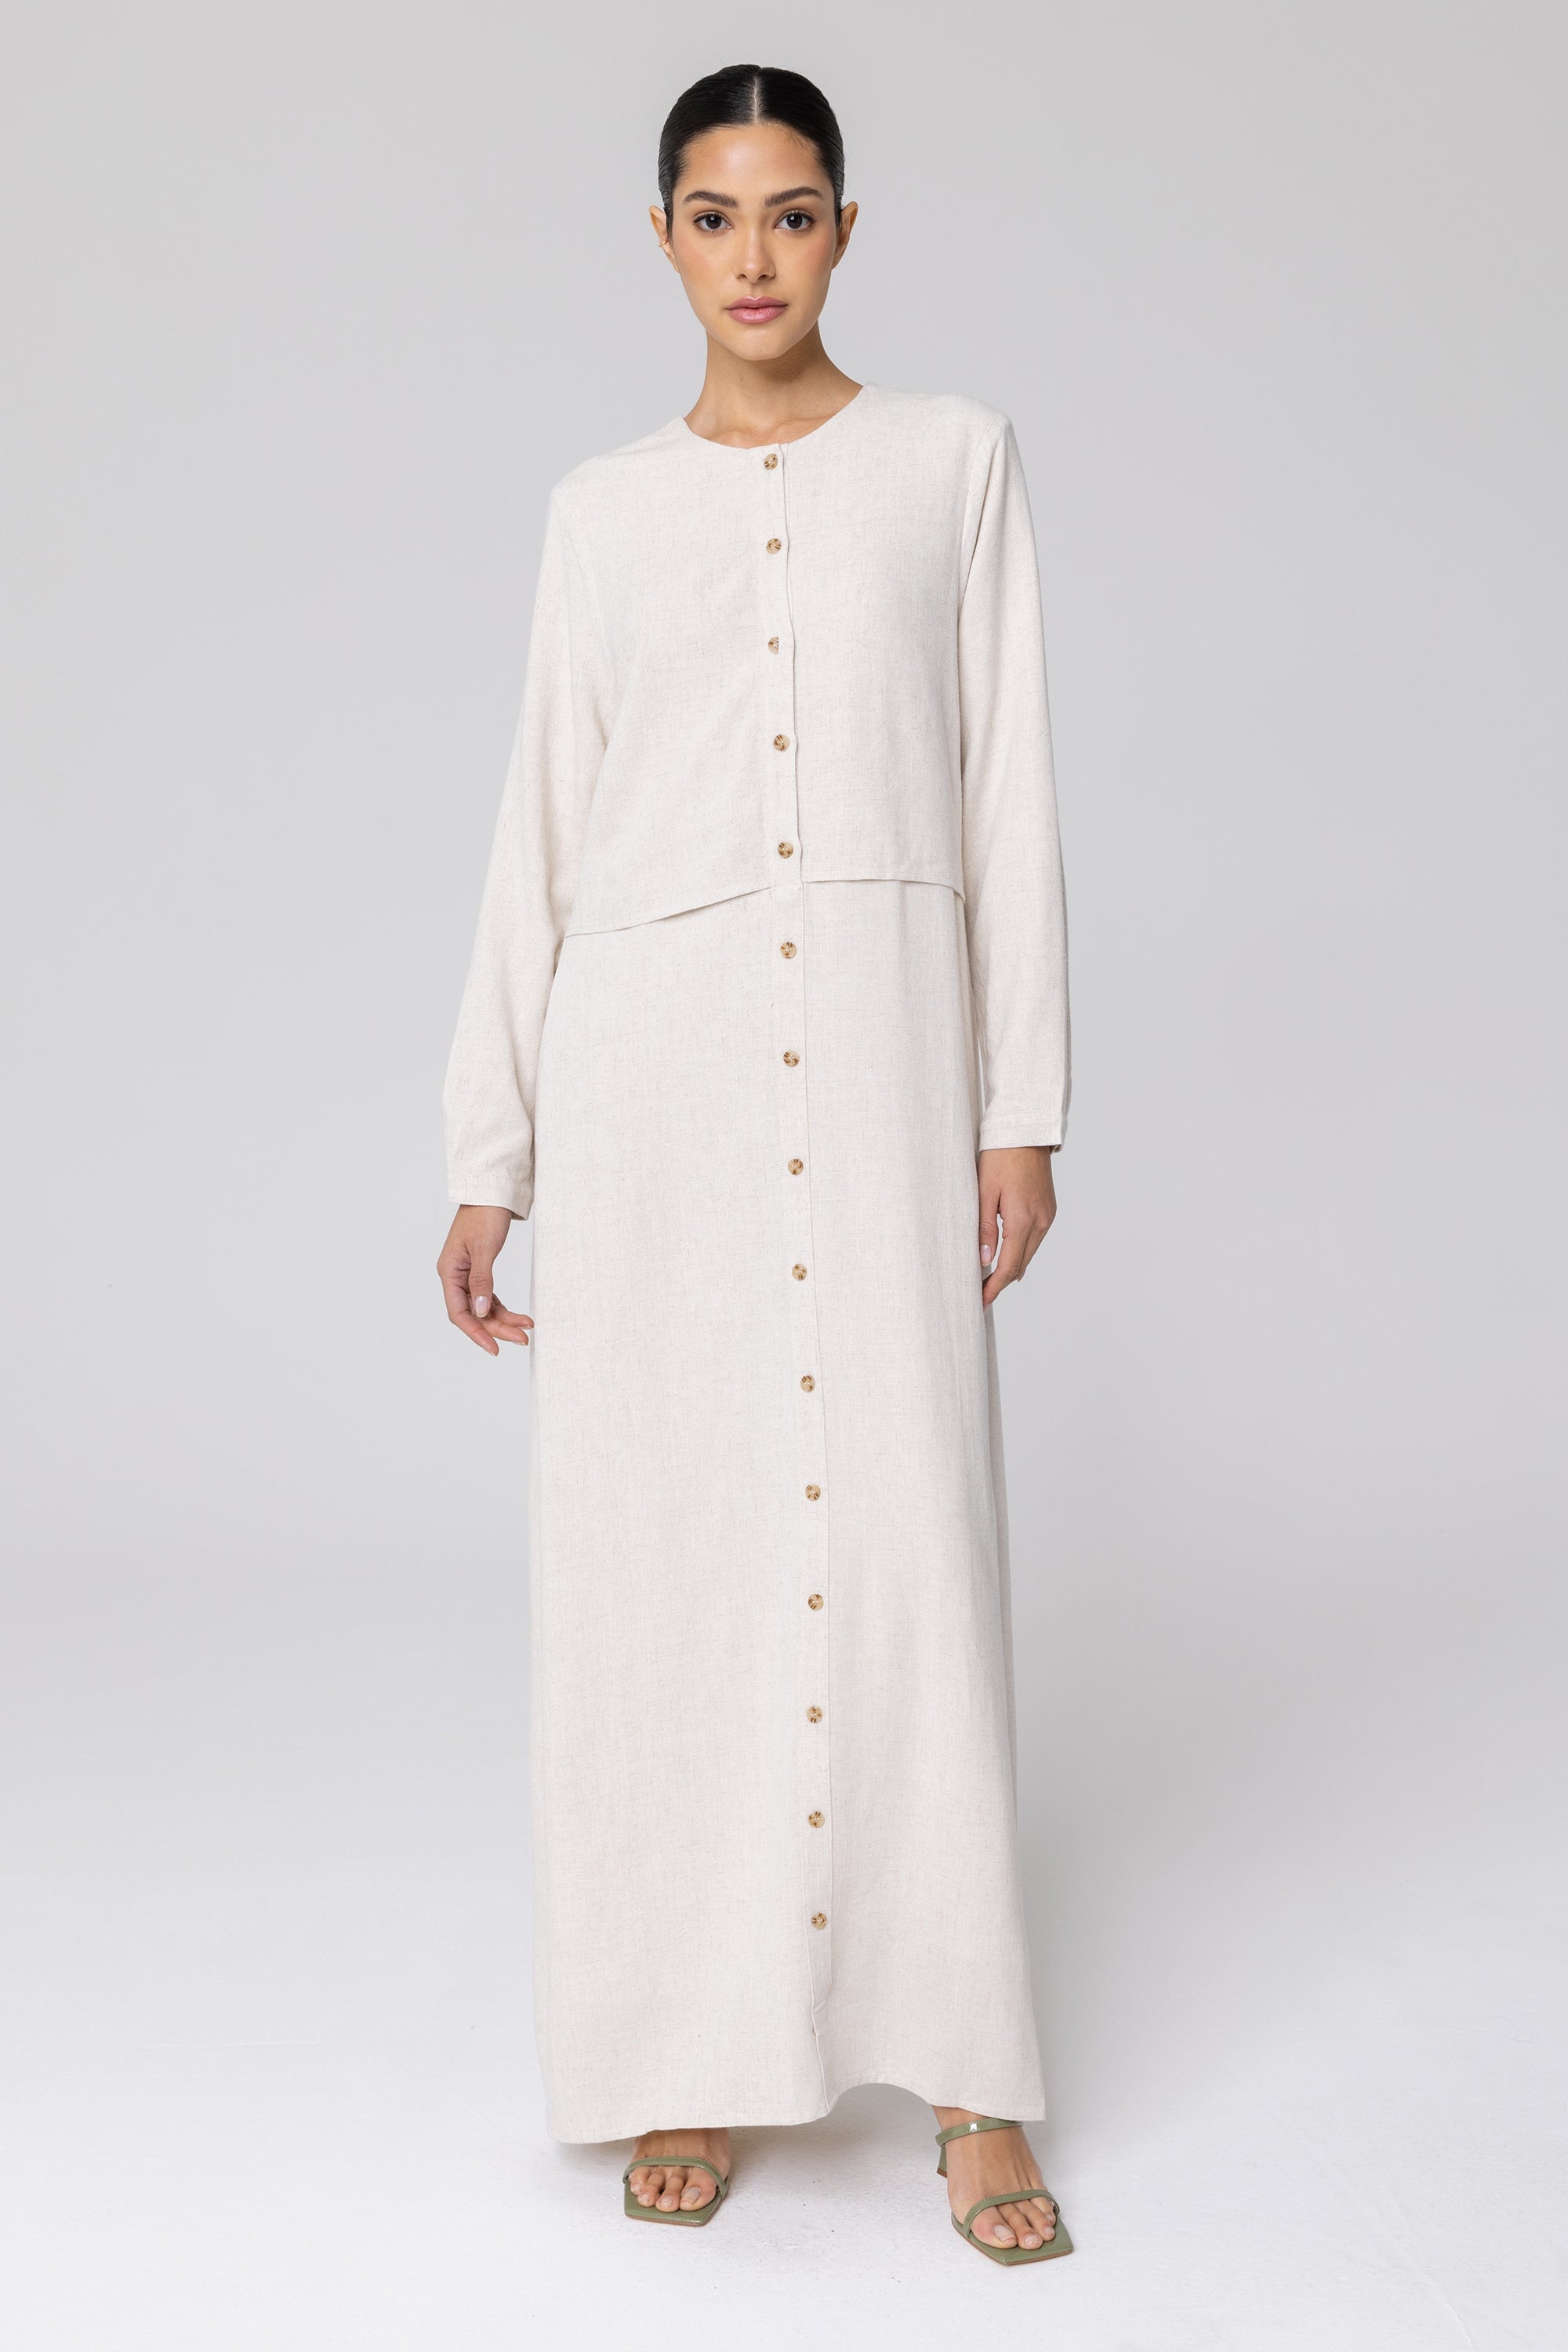 Buy Japanese Cotton Linen Dress online